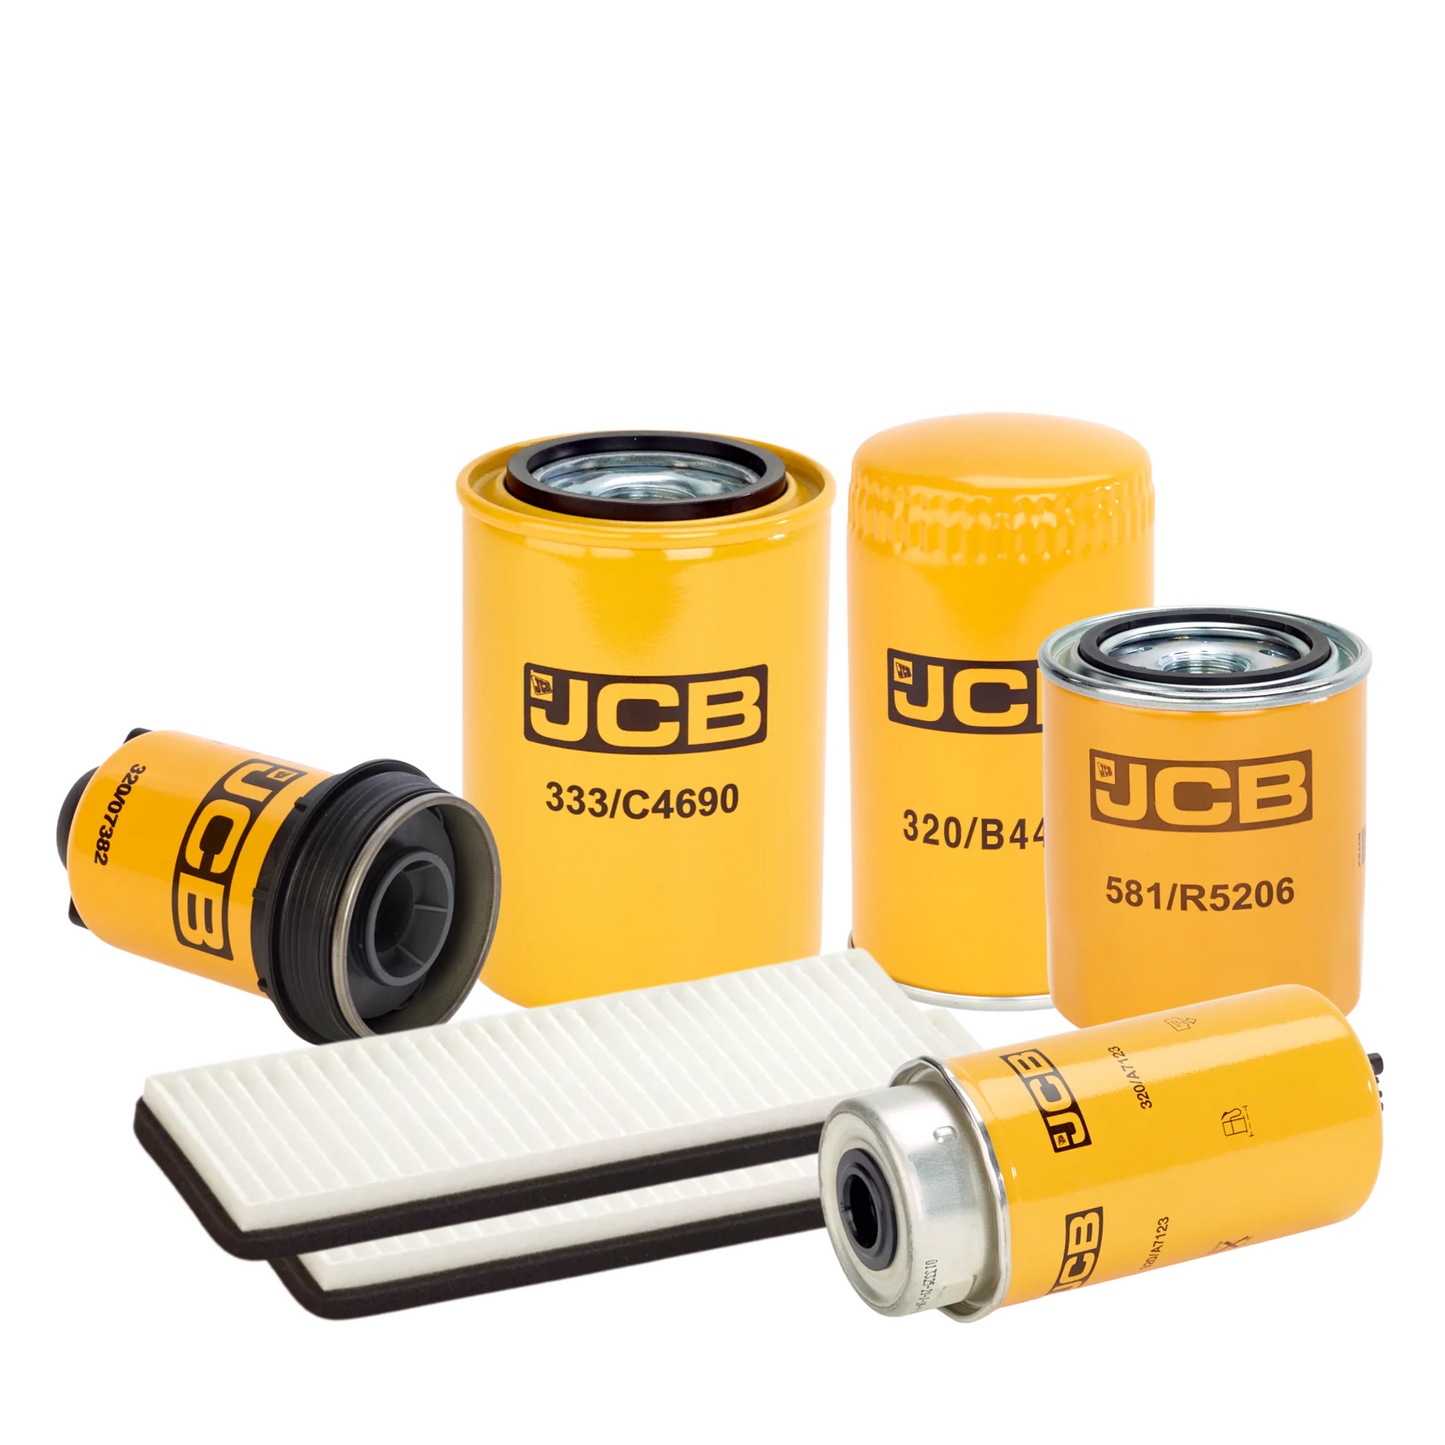 JCB 535-95 7500 Hour Filter Service Kit